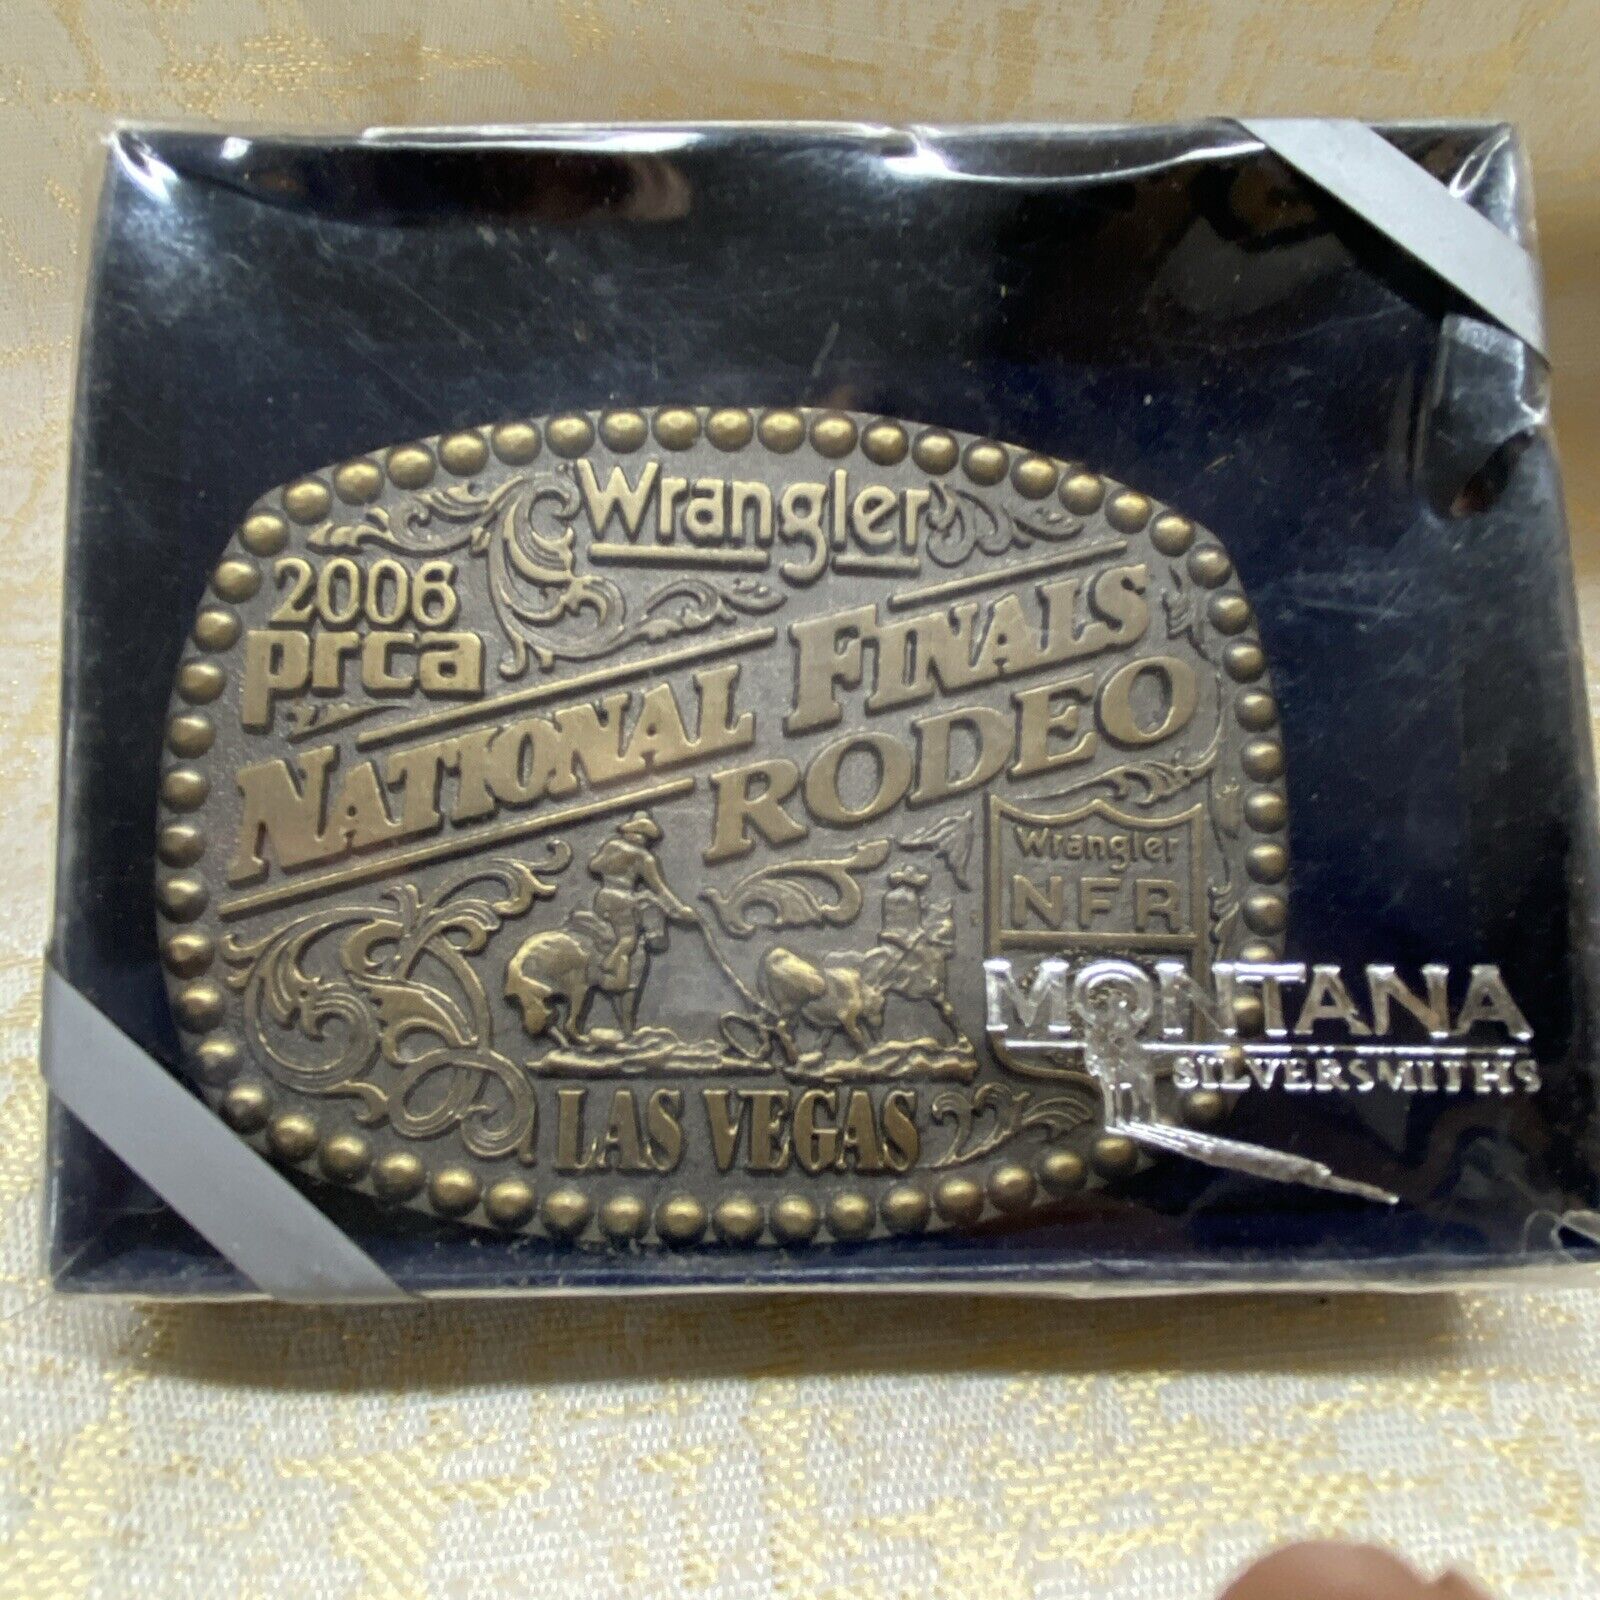 2006 Prca National Finals Rodeo Belt Montana Silver Smiths Buckle